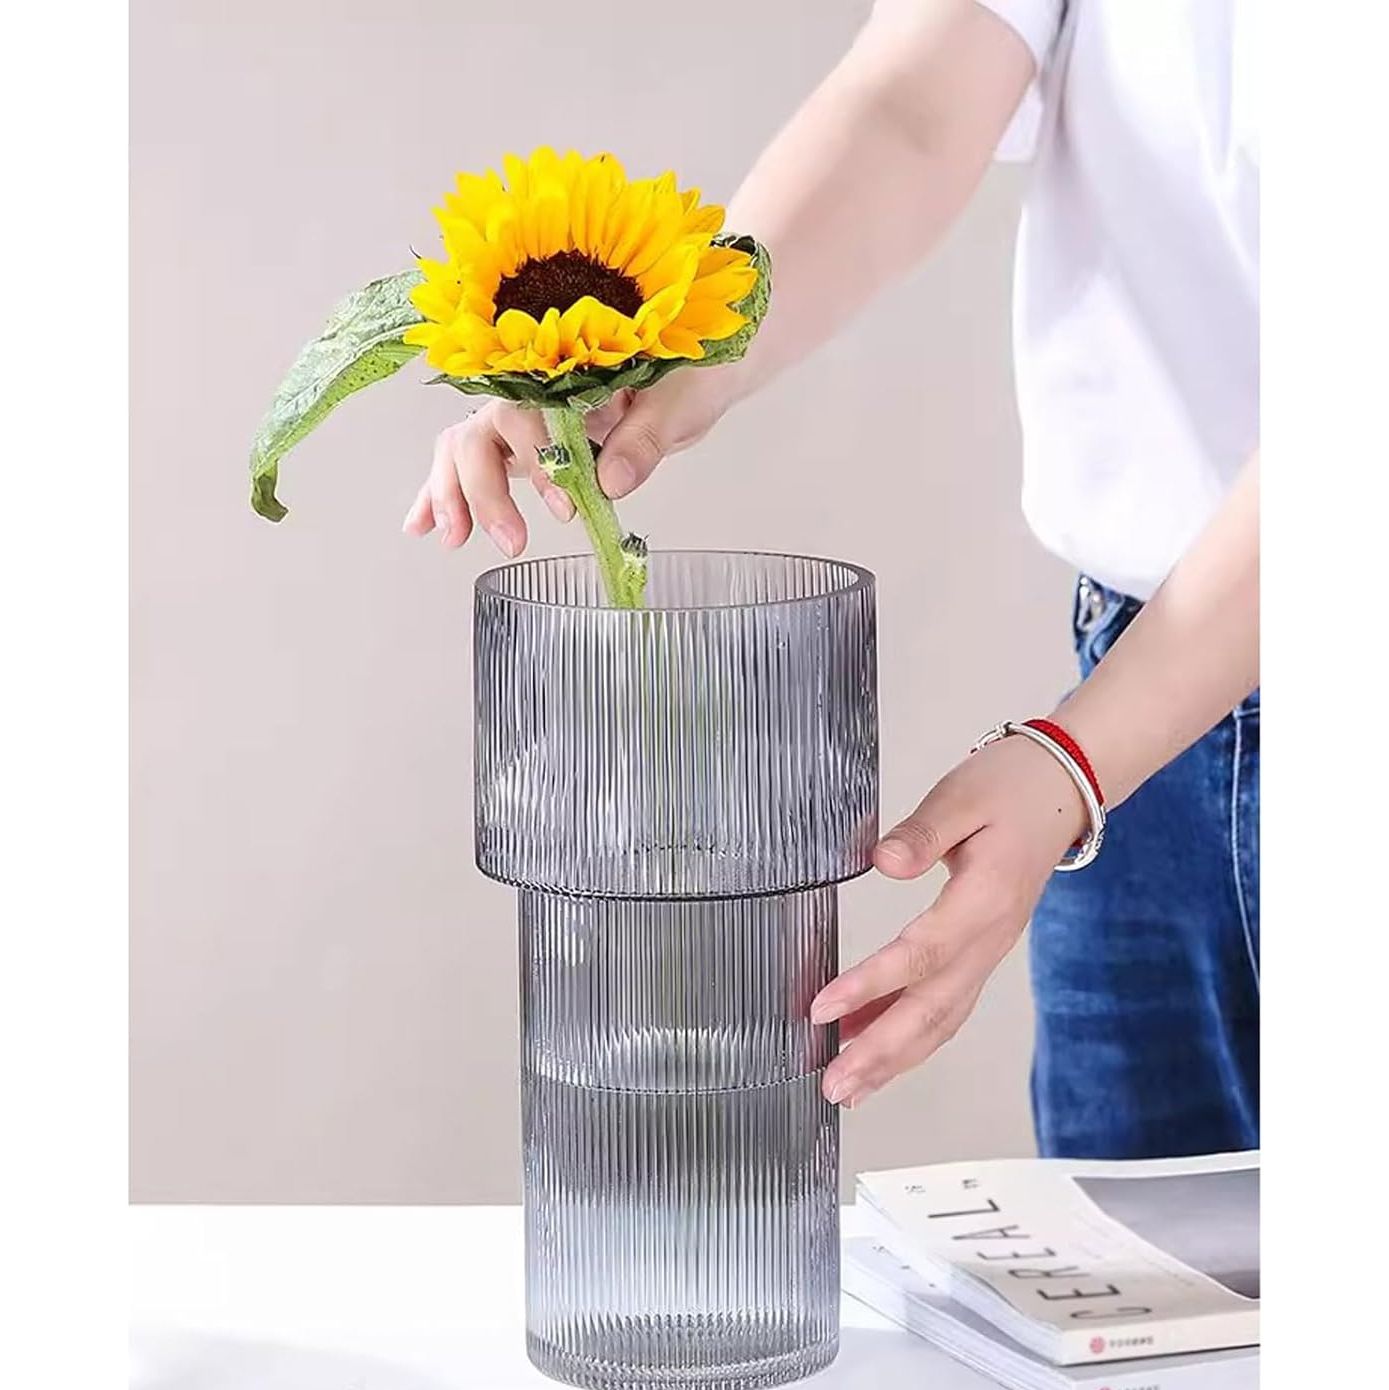 Vaza stiklinė pilkos sp. 24x10 cm Is-QH-6-Gwen